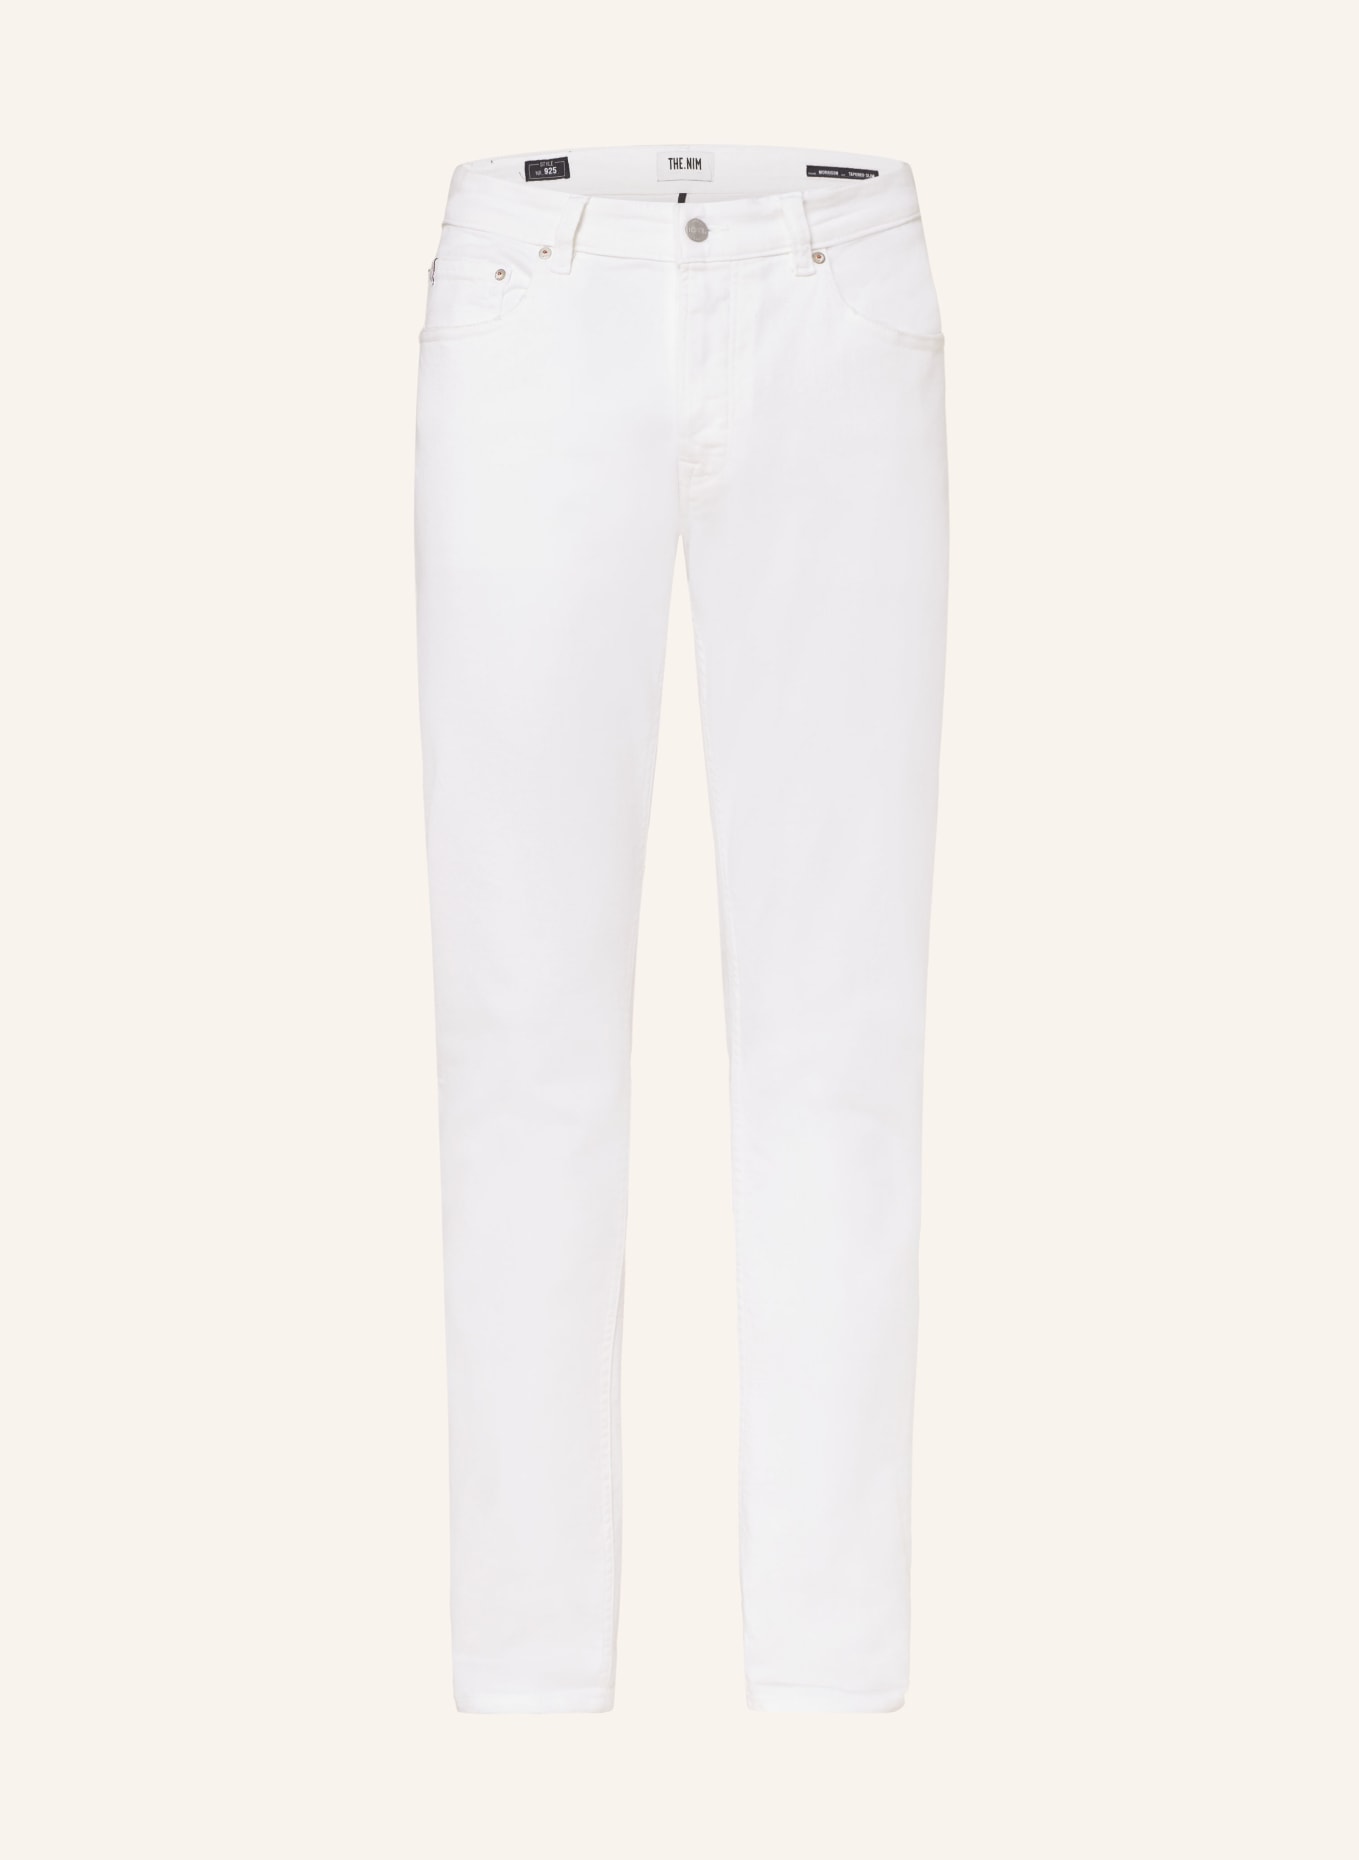 THE.NIM STANDARD Jeans MORRISON Tapered Slim Fit, Farbe: C001-WHT WHITE (Bild 1)